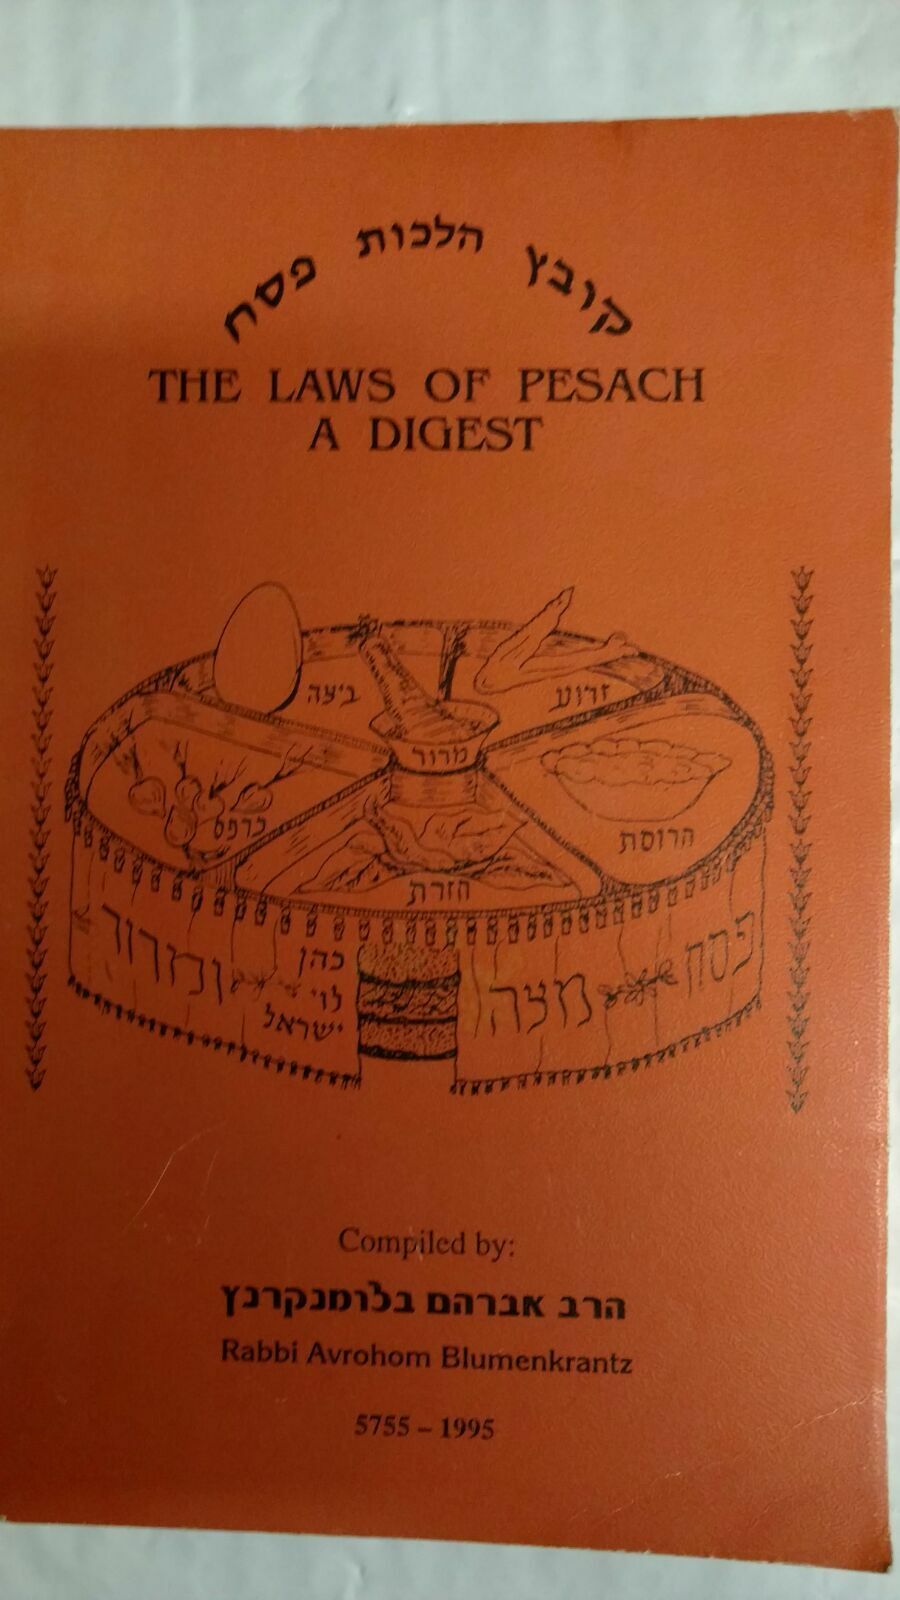 The Laws Of Pesach; A Digest (1988) by Rabbi Avrohom Blumenkrantz